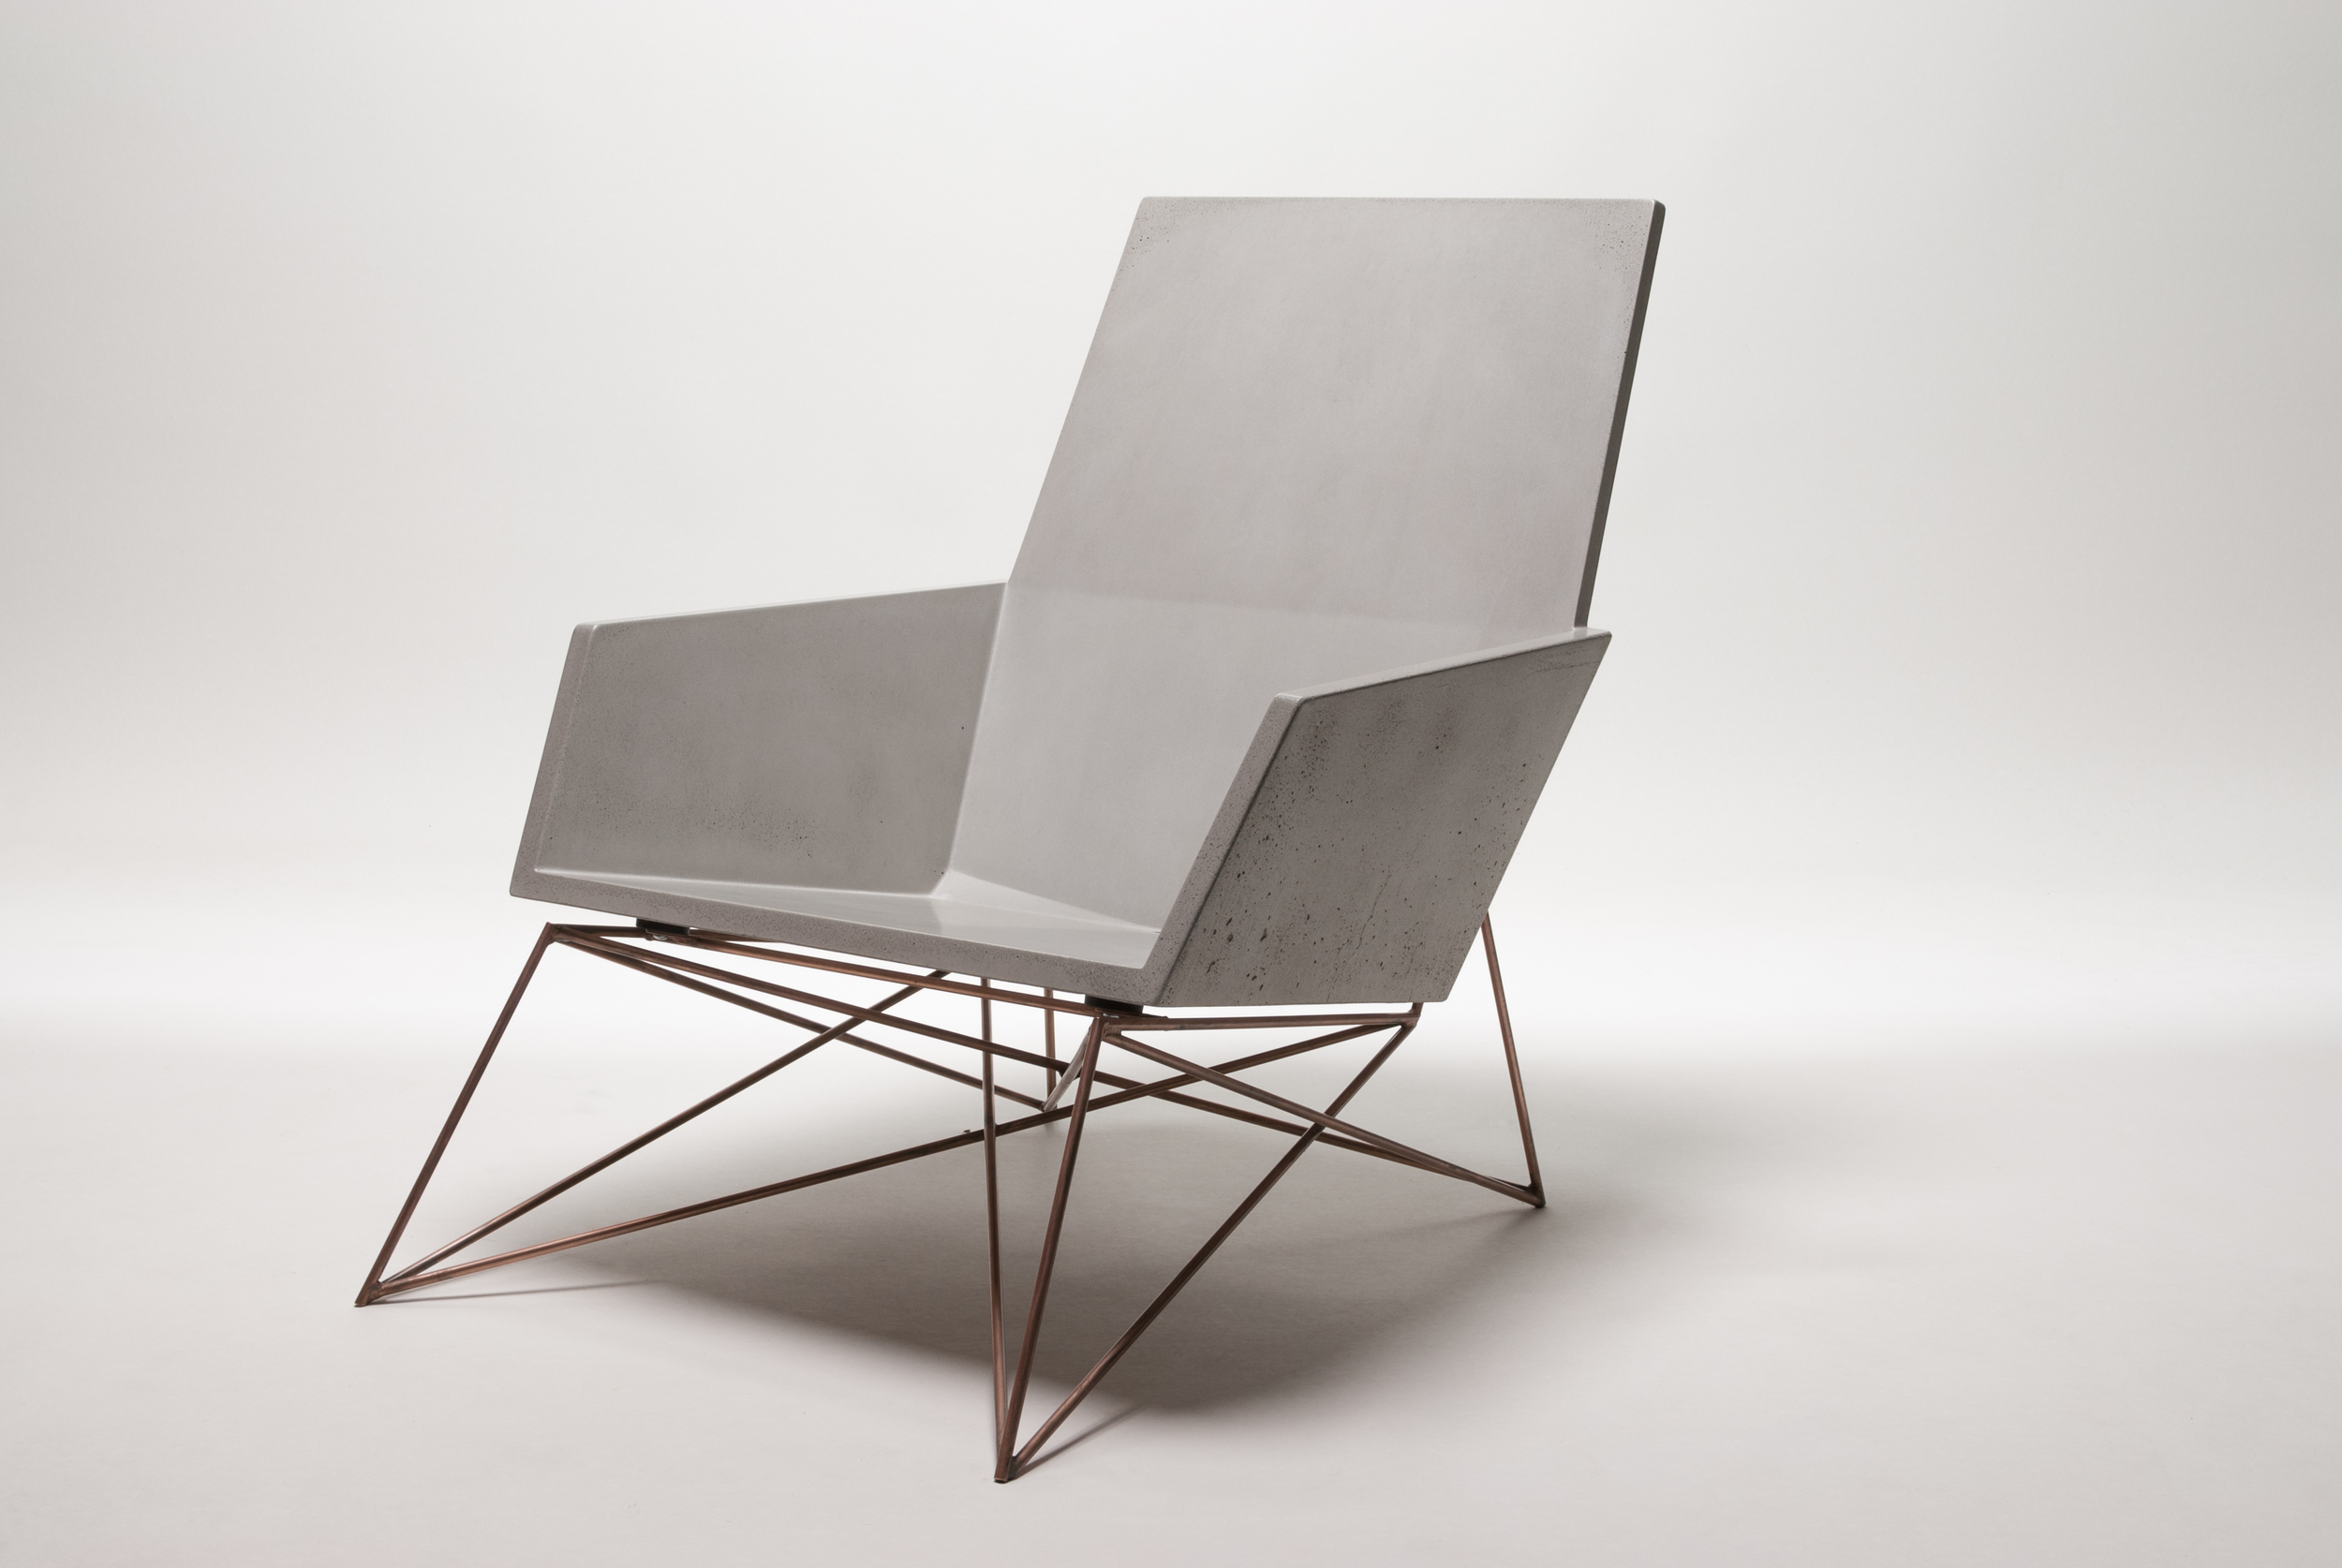  The Modern Muskoka Chair / by Hard Goods 